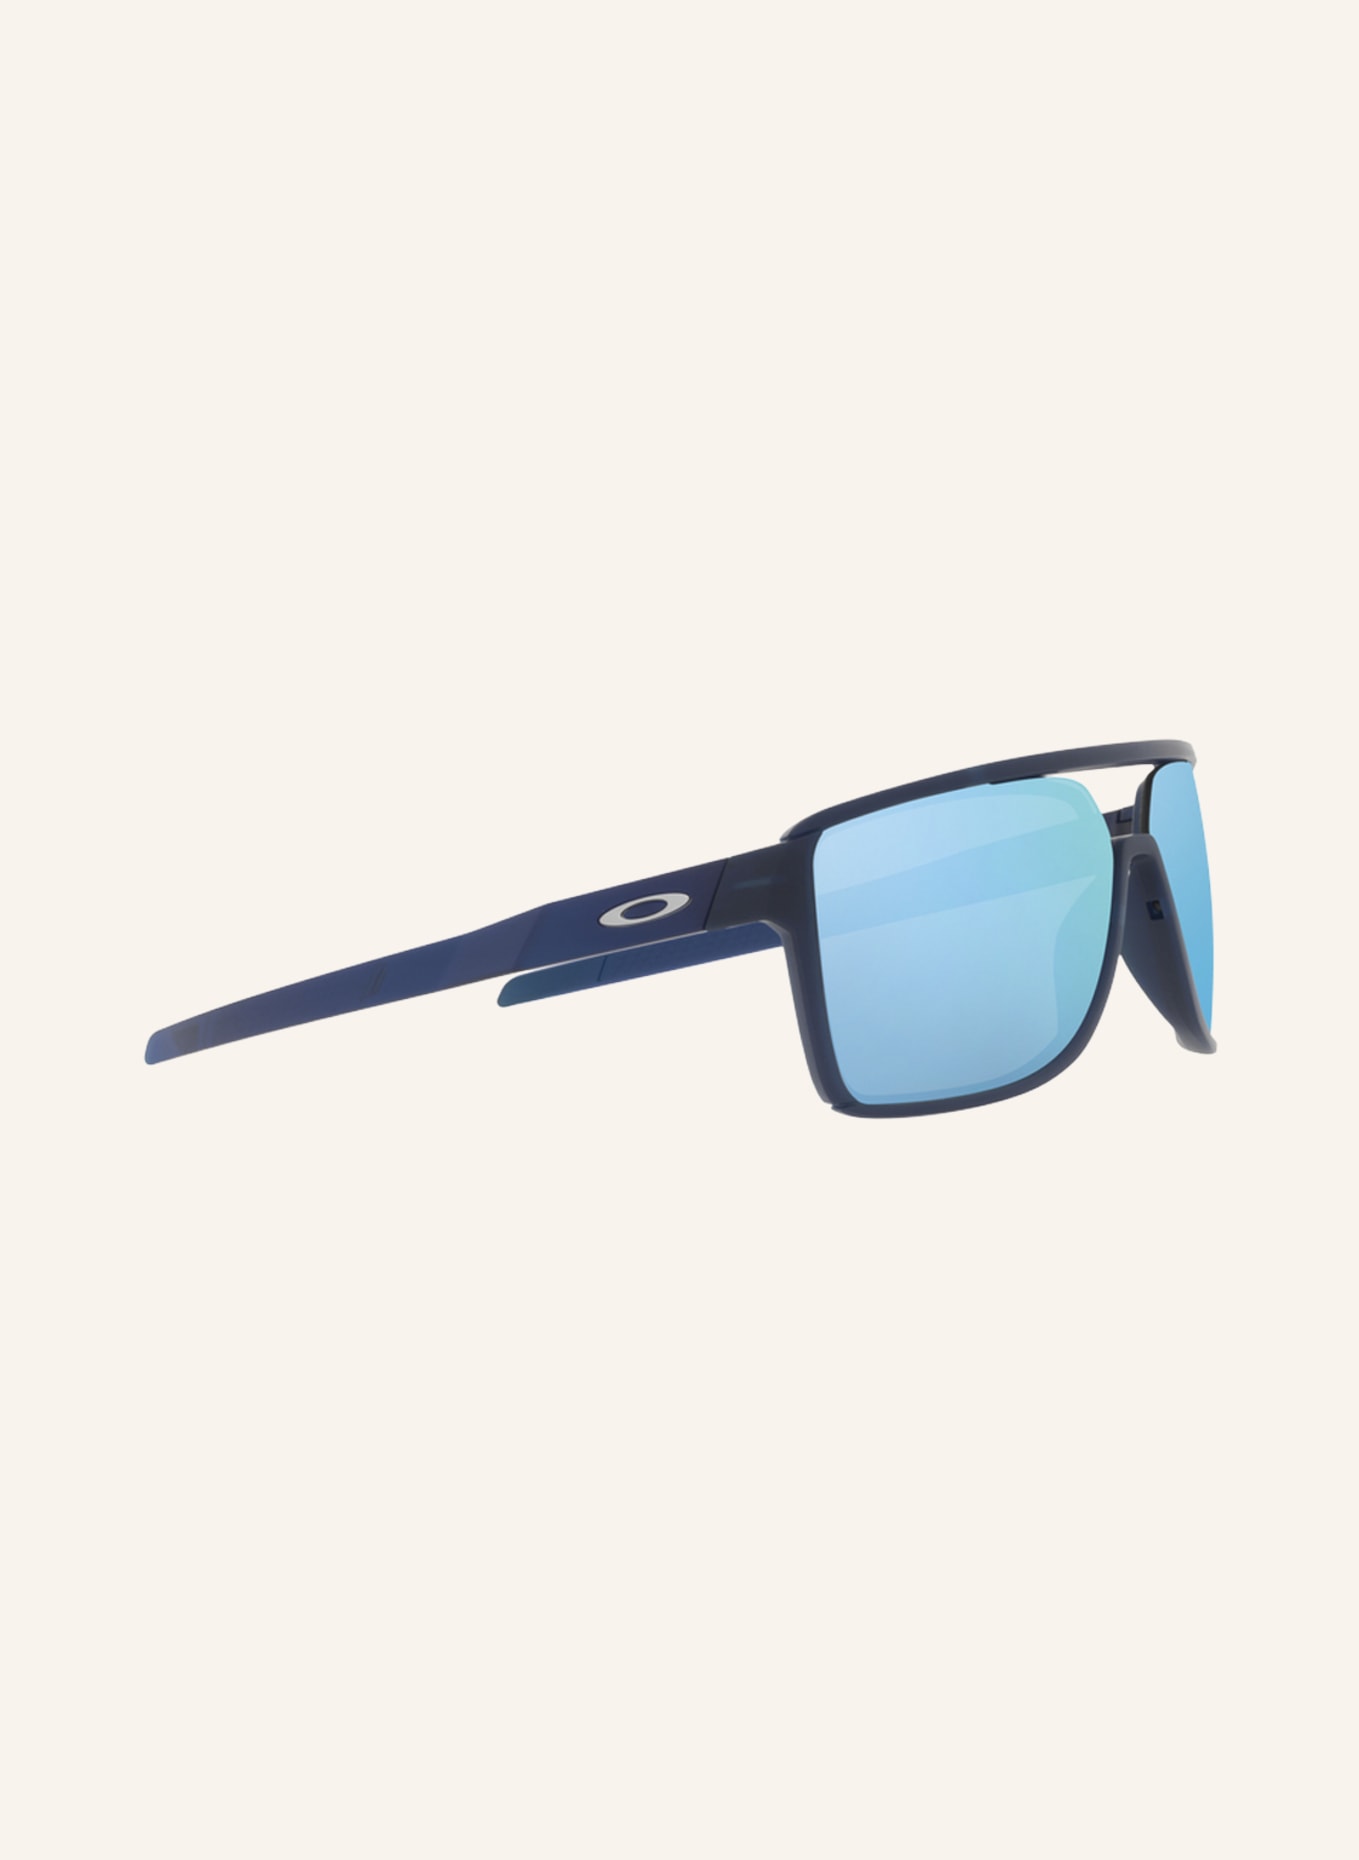 Are Costa Sunglasses Better Than Oakley | KoalaEye